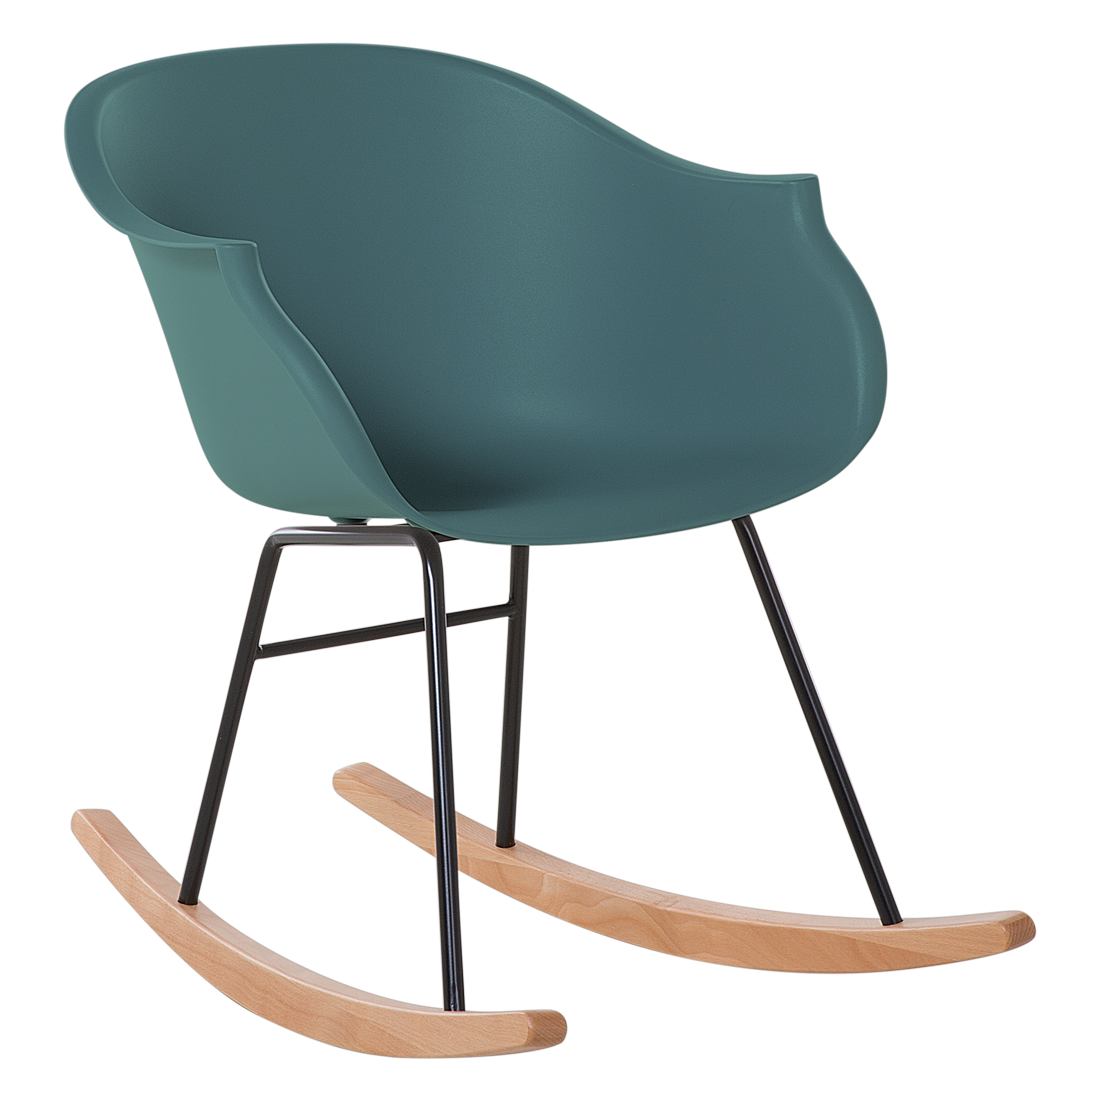 Beliani Rocking Chair Emerald Green Synthetic Material Metal Legs Shell Seat Solid Wood Skates Modern Scandinavian Style